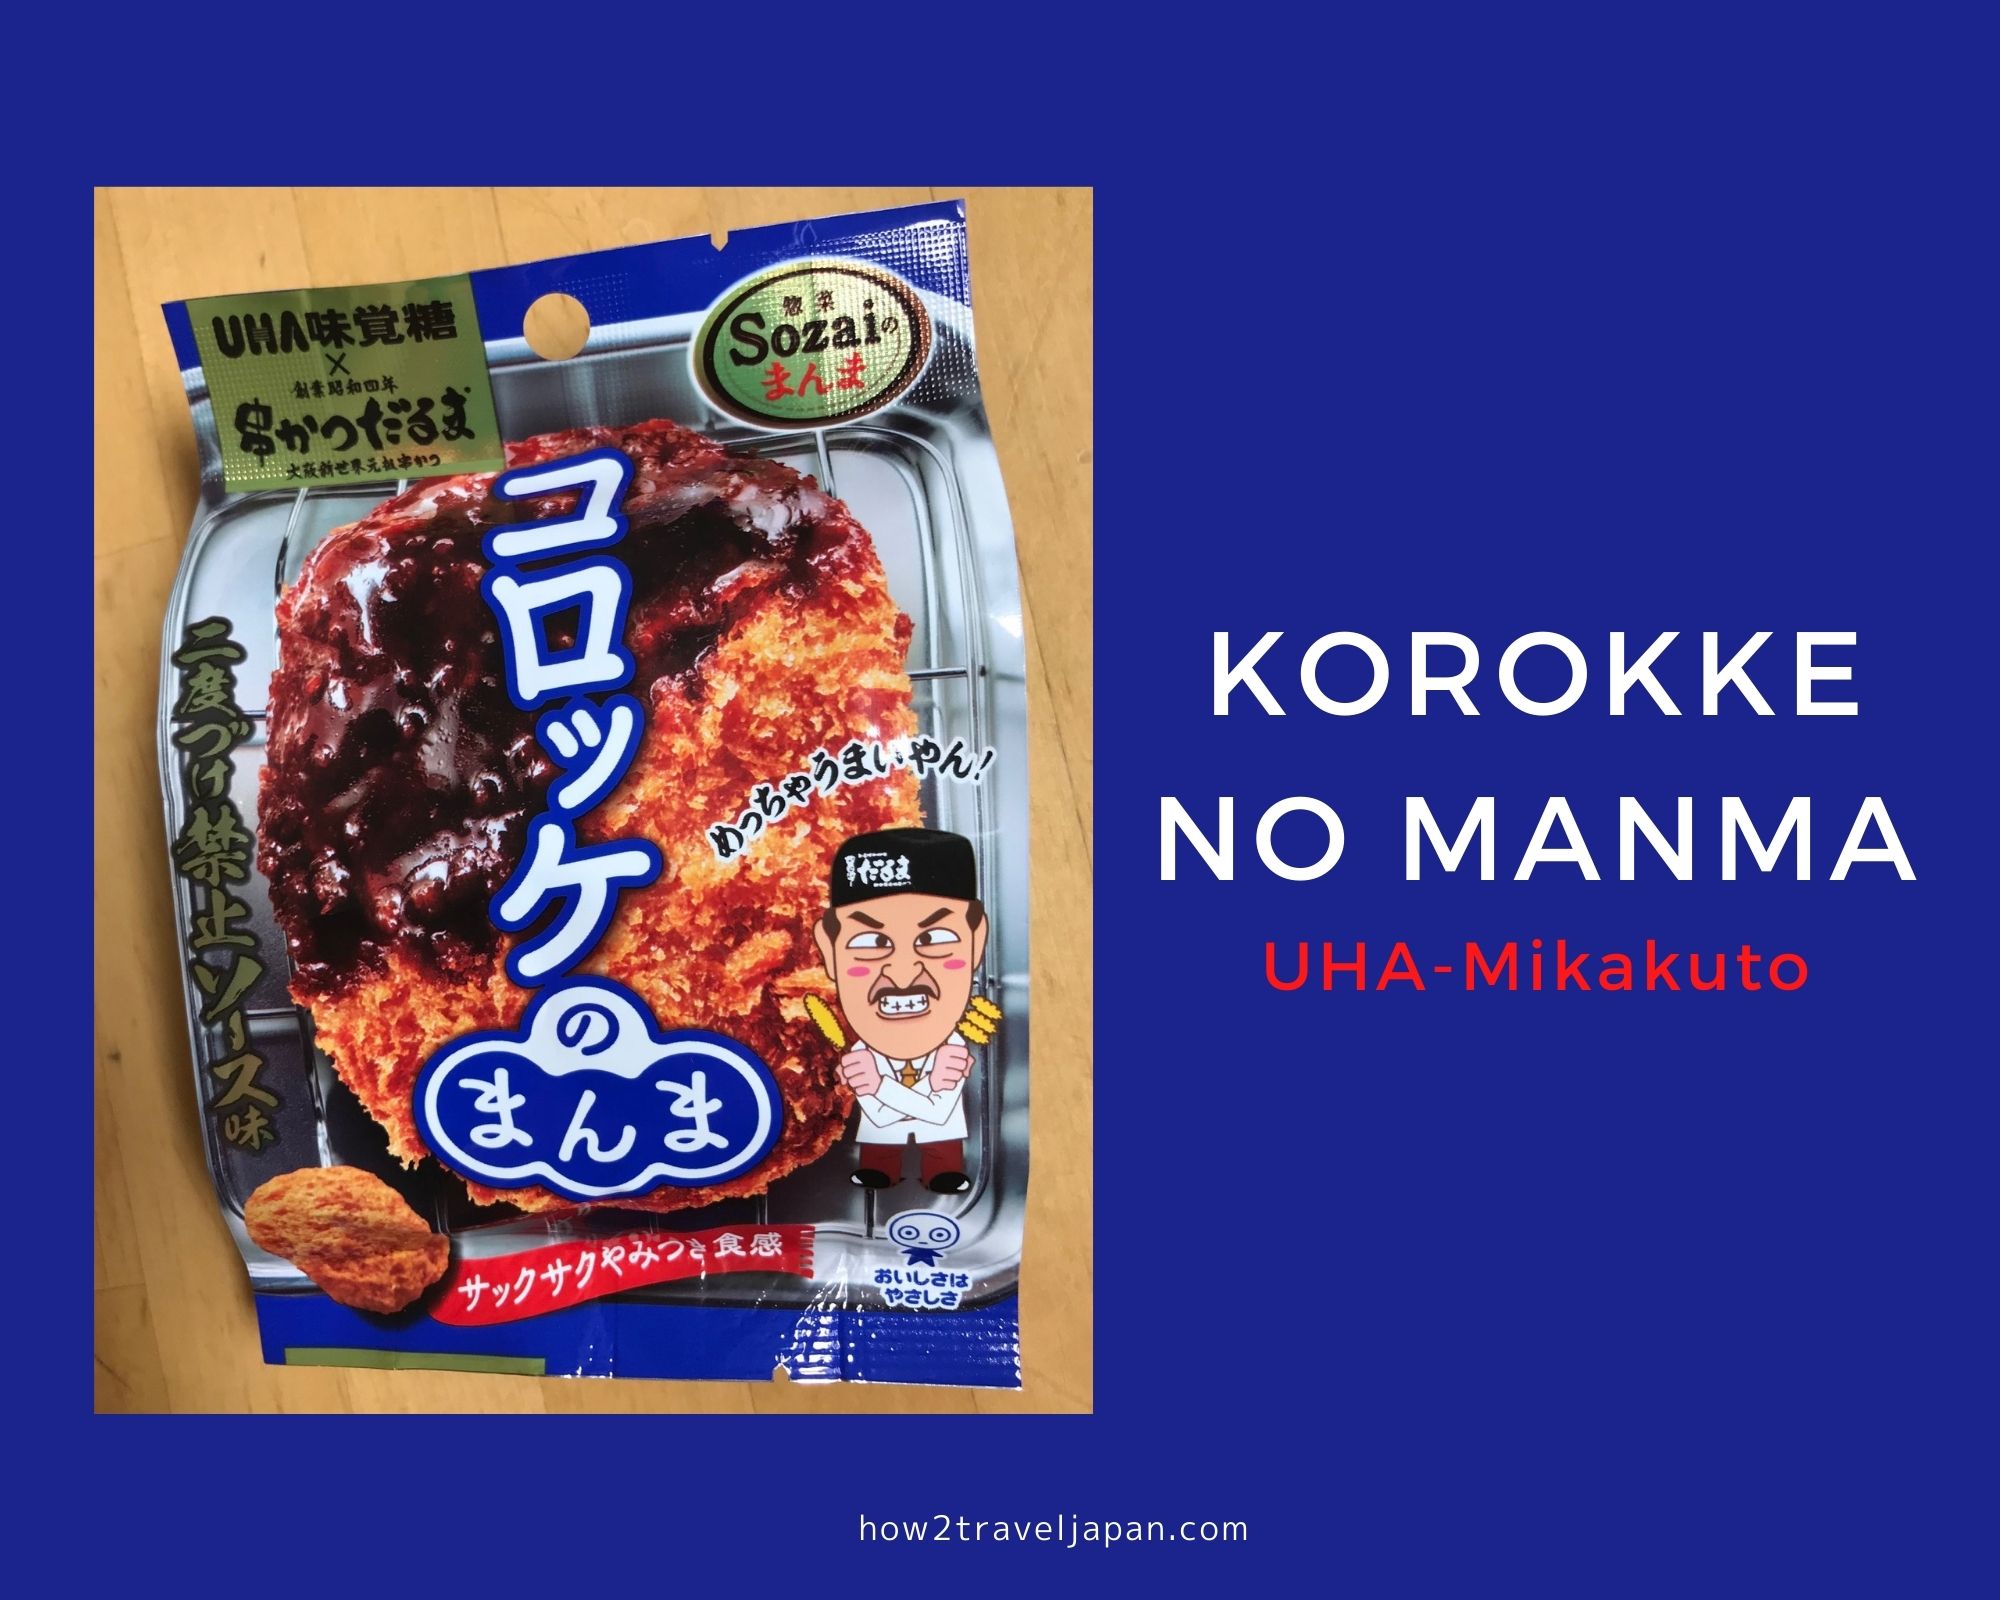 Read more about the article 【Korokke no manma】 from UHA Mikakuto